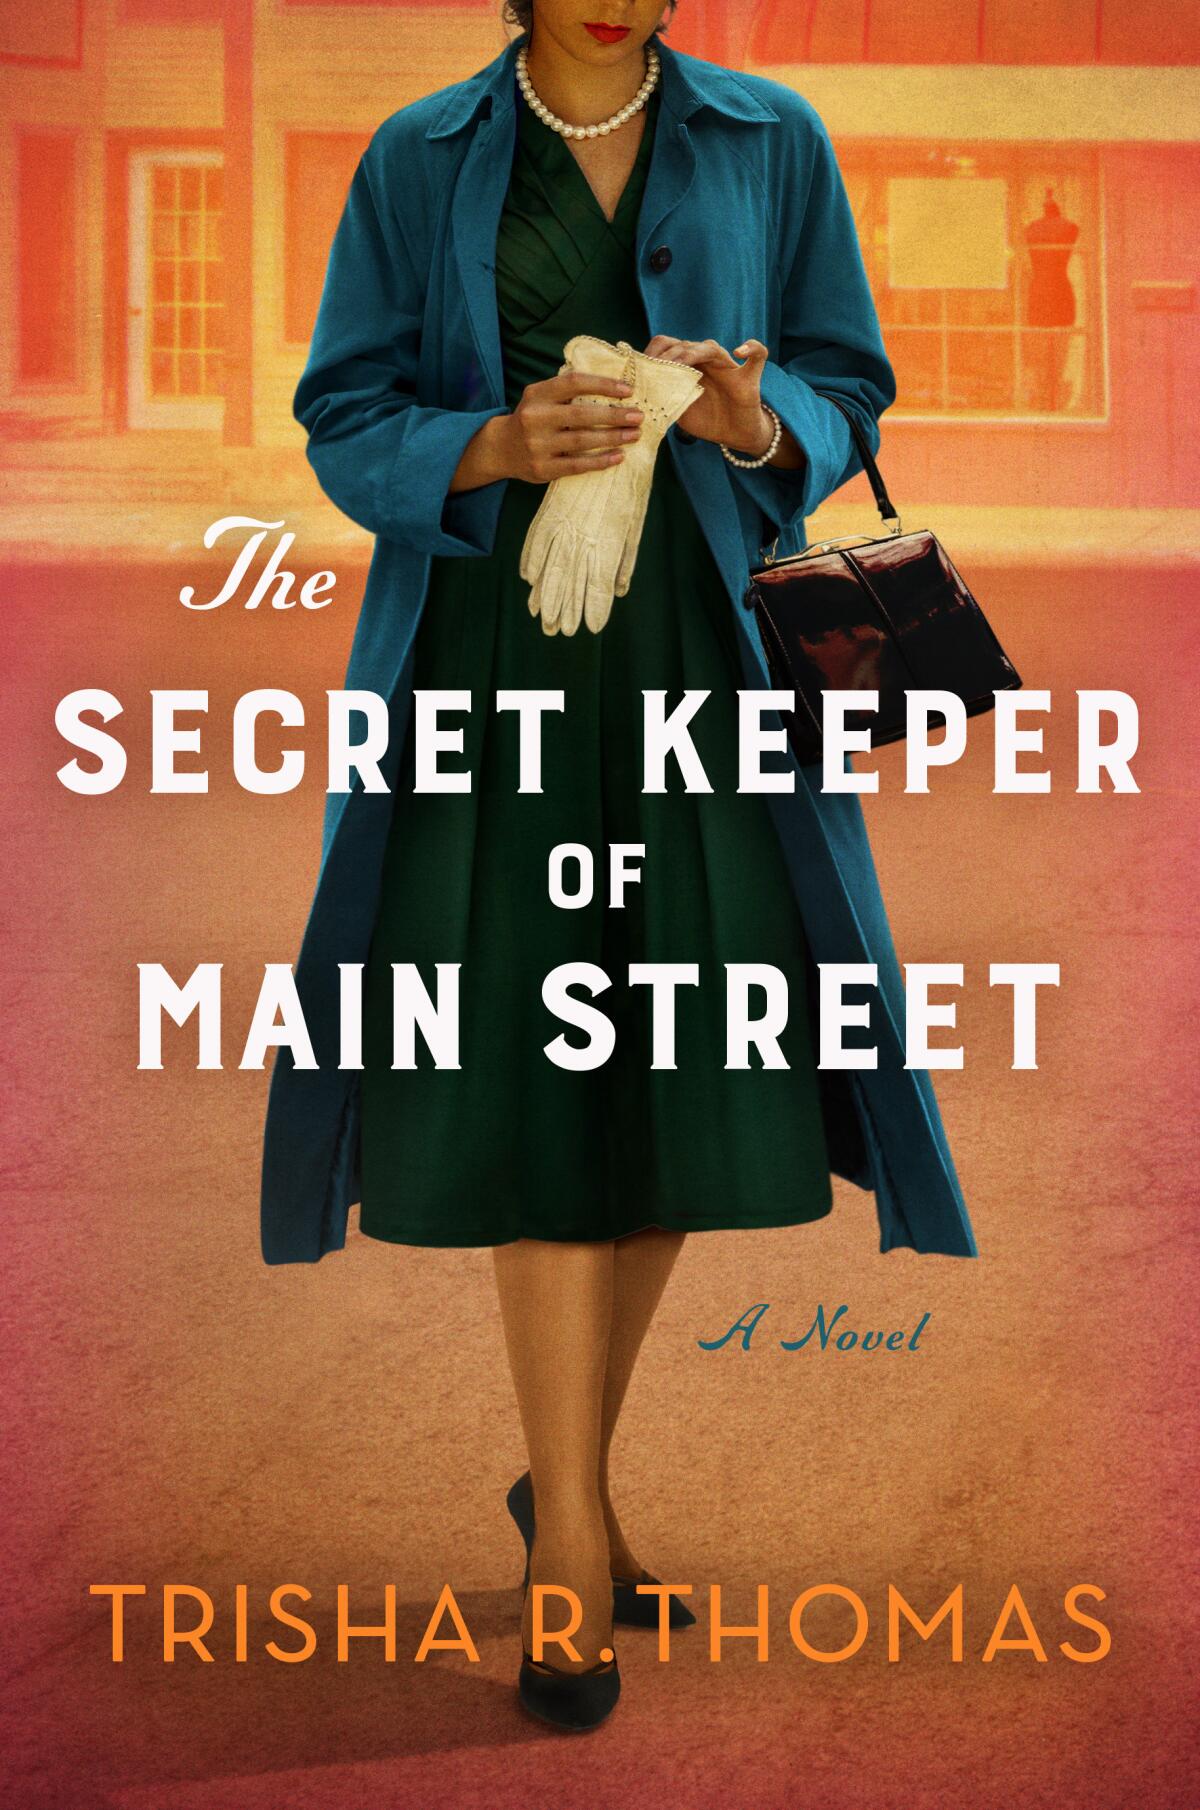 "The Secret Keeper of Main Street" by Trisha R. Thomas